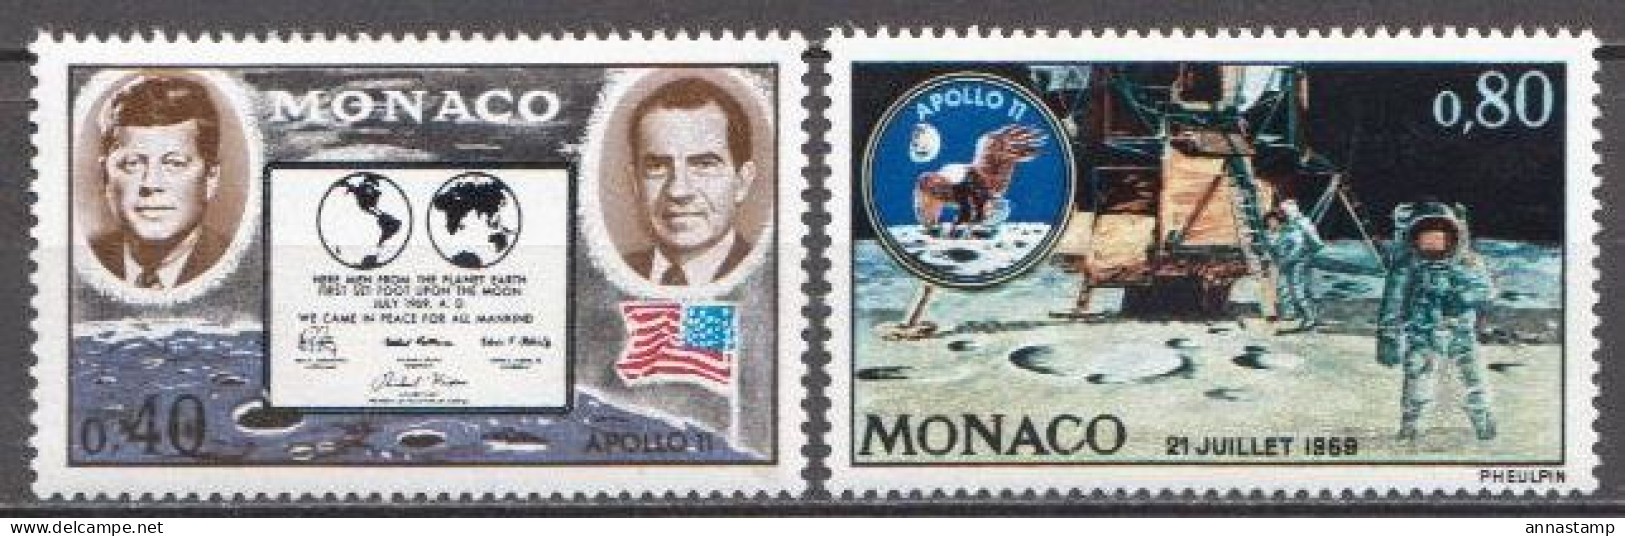 Monaco MNH Set - Europe